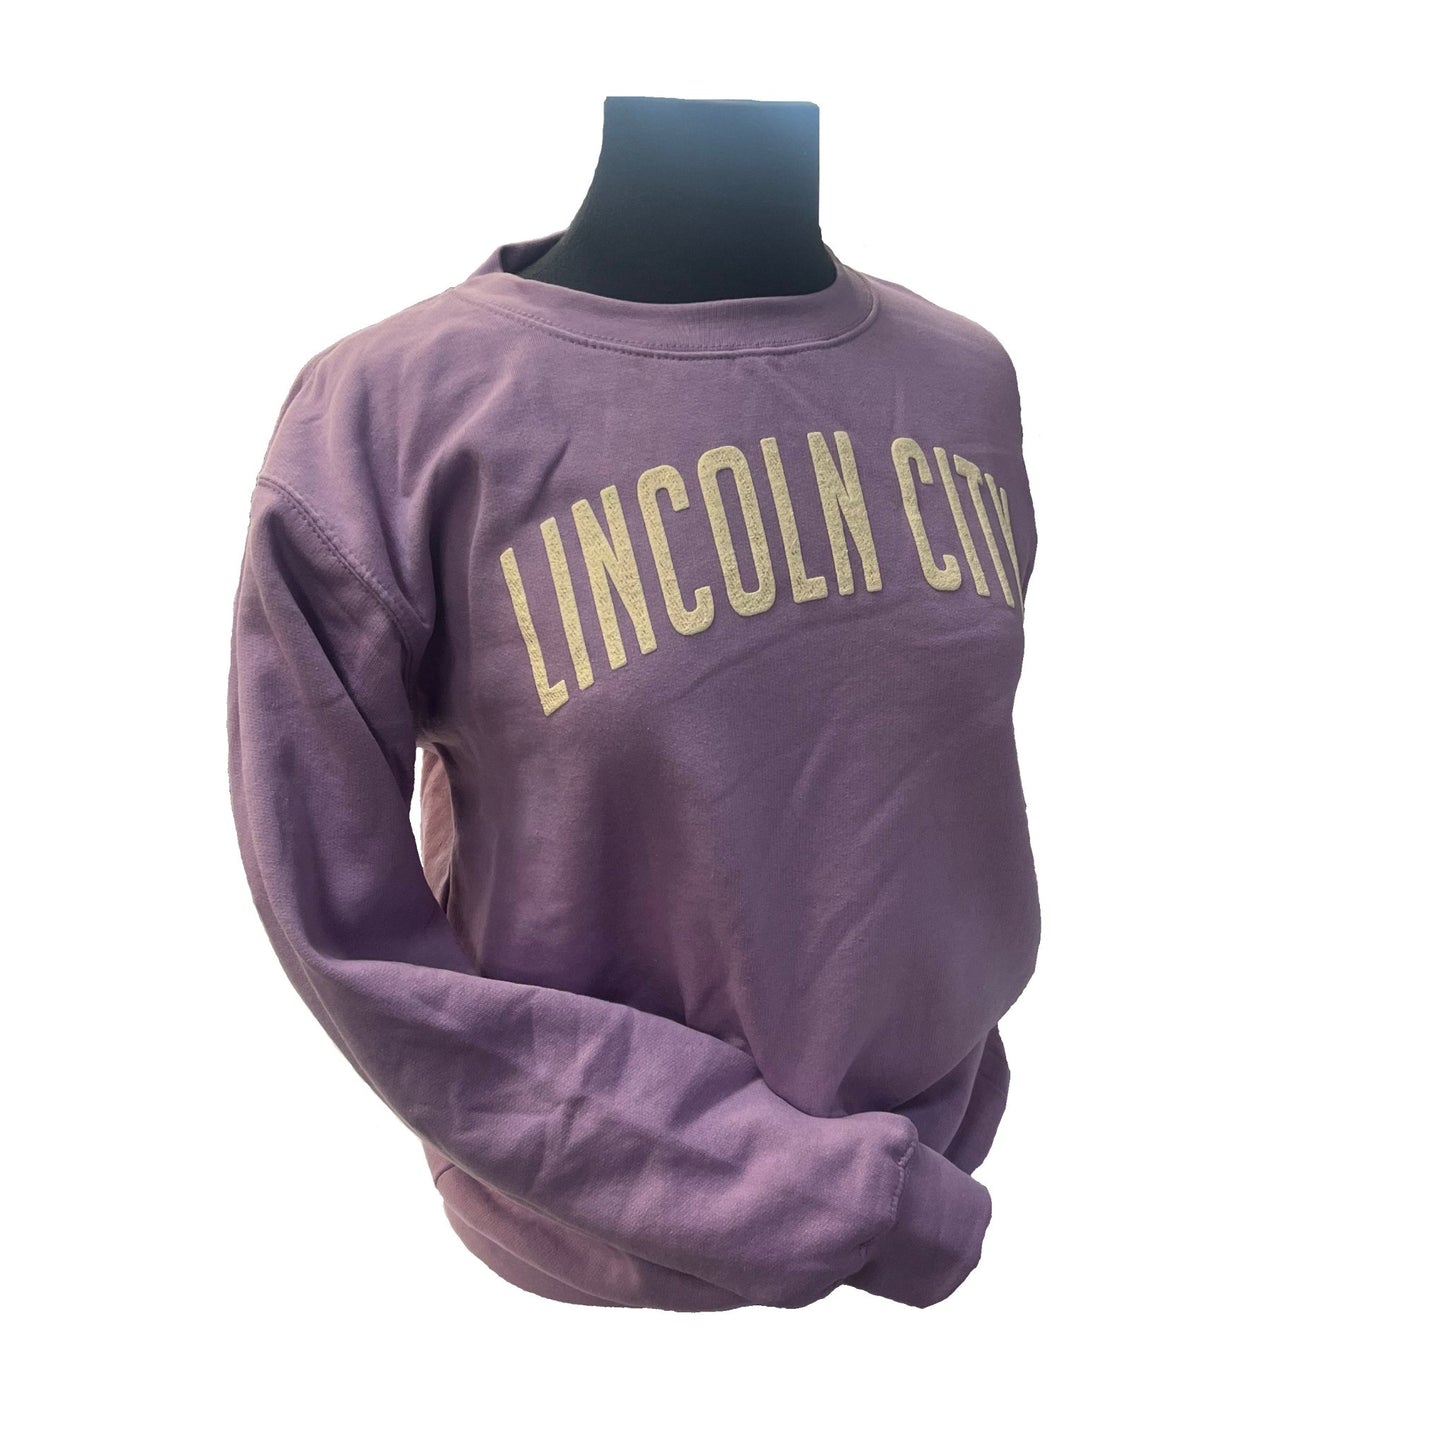 Unisex Crewneck Lincoln City Lilac